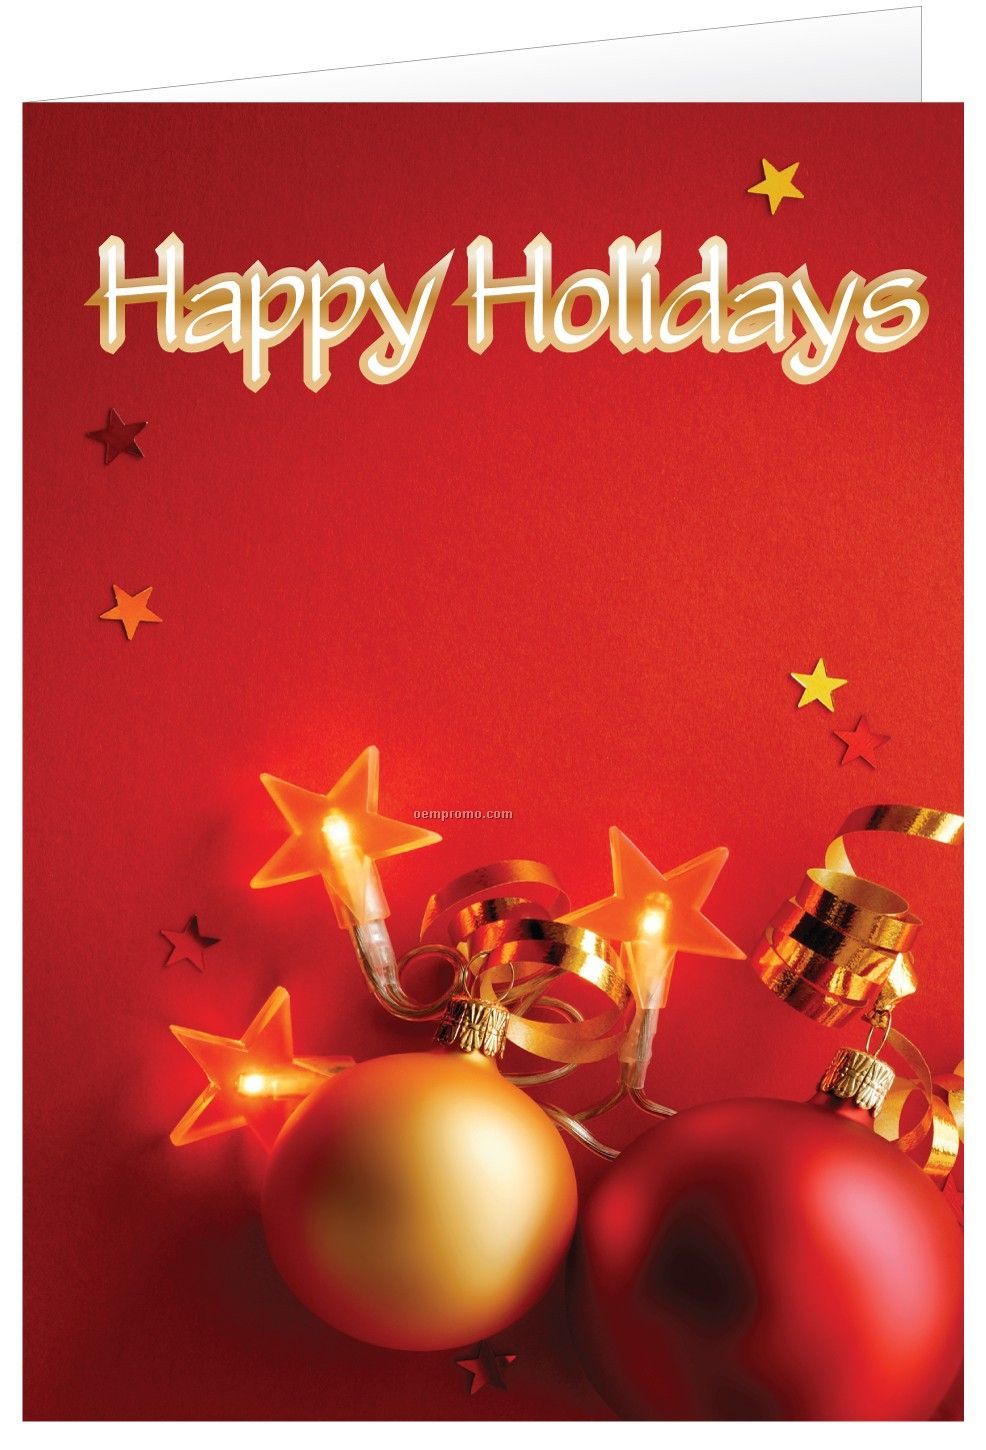 free clipart happy holidays greeting - photo #41